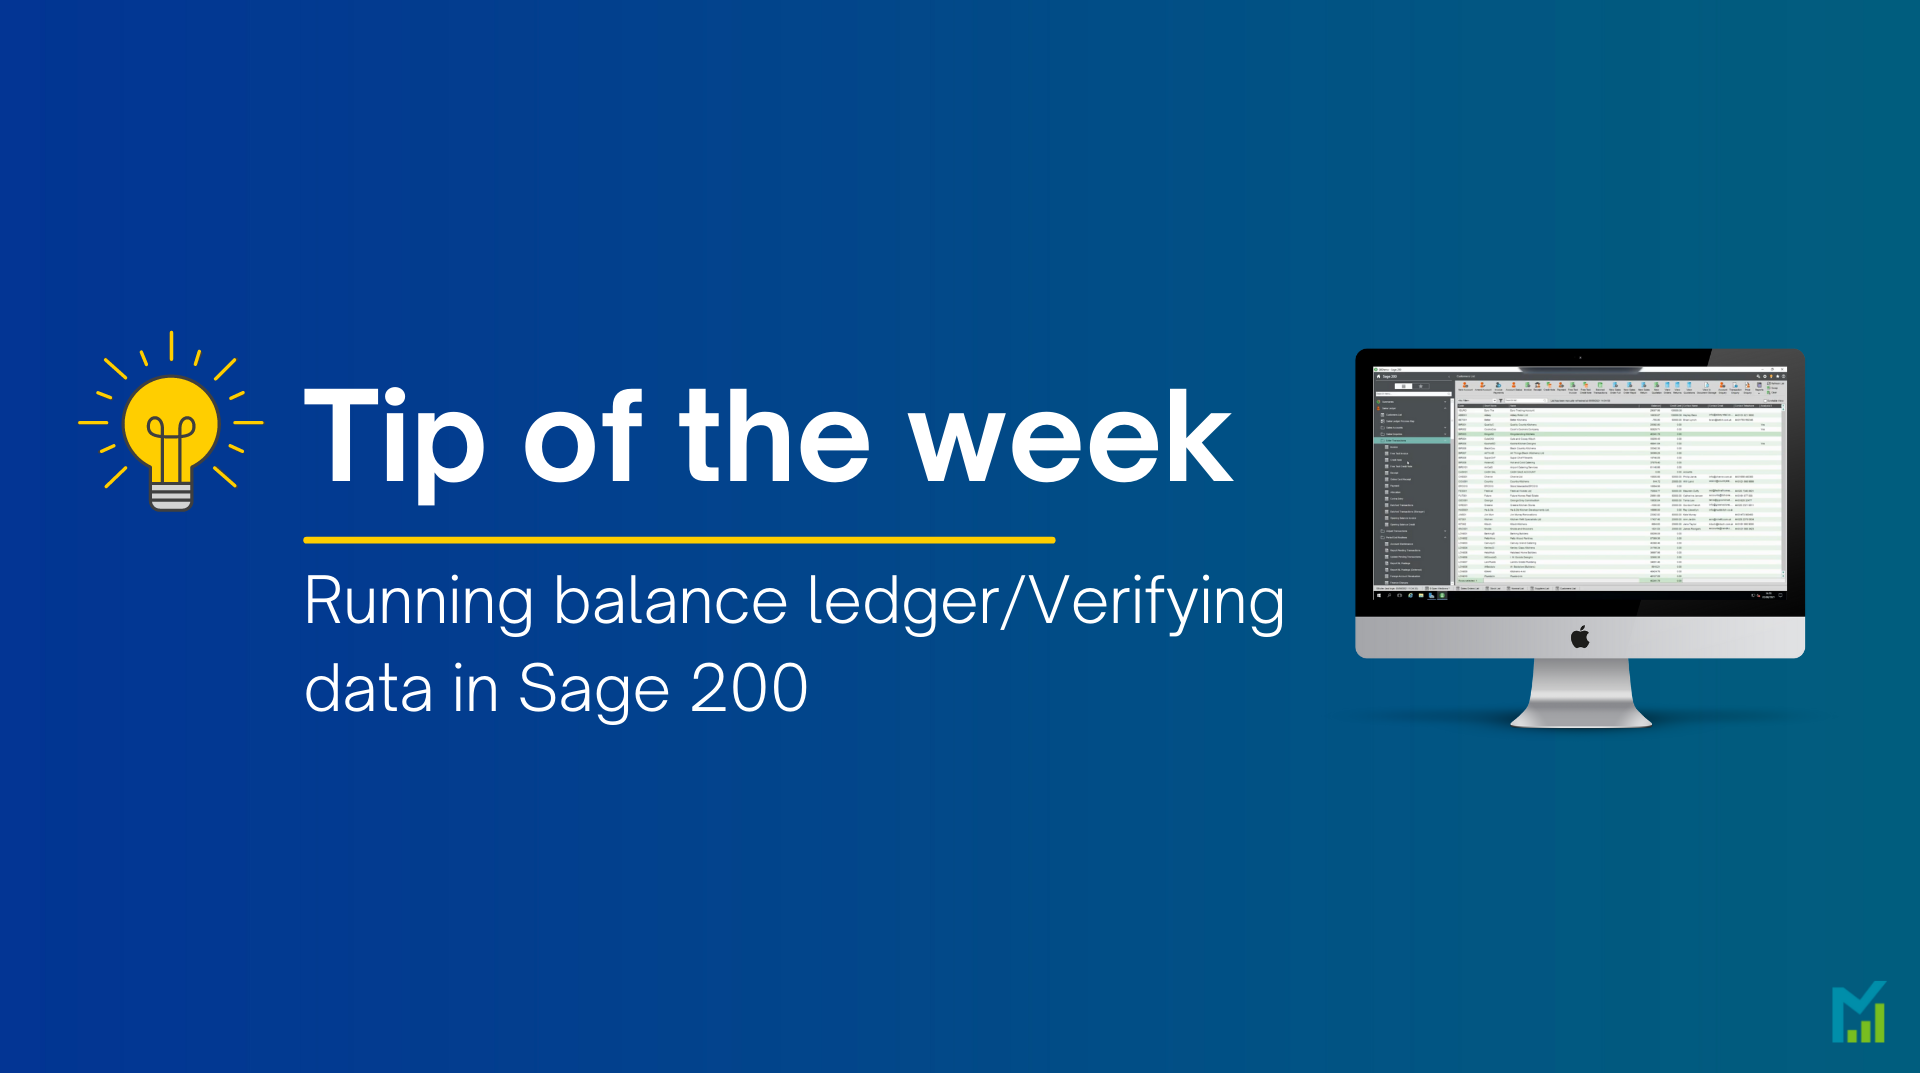 Running balance ledger/Verifying data in Sage 200